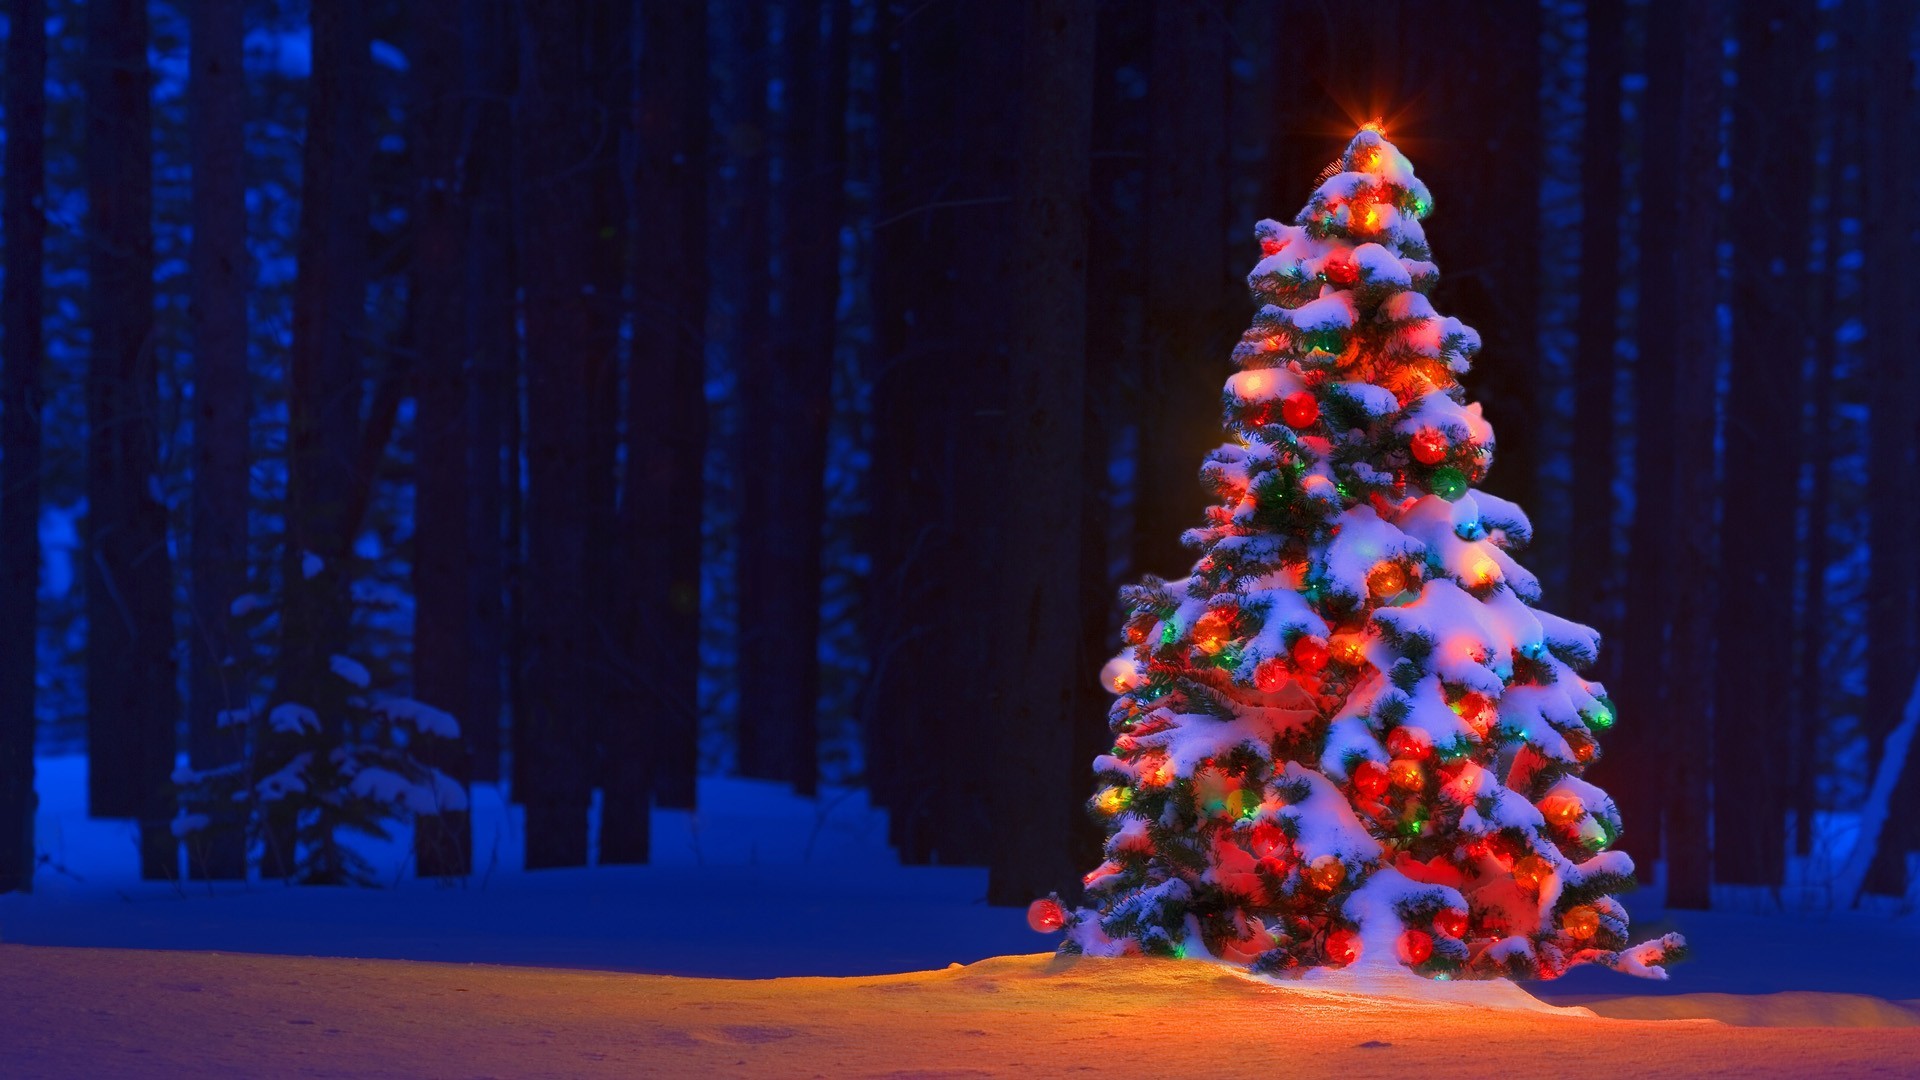 1920x1080 Christmas Lights Tree Desktop Backgrounds.